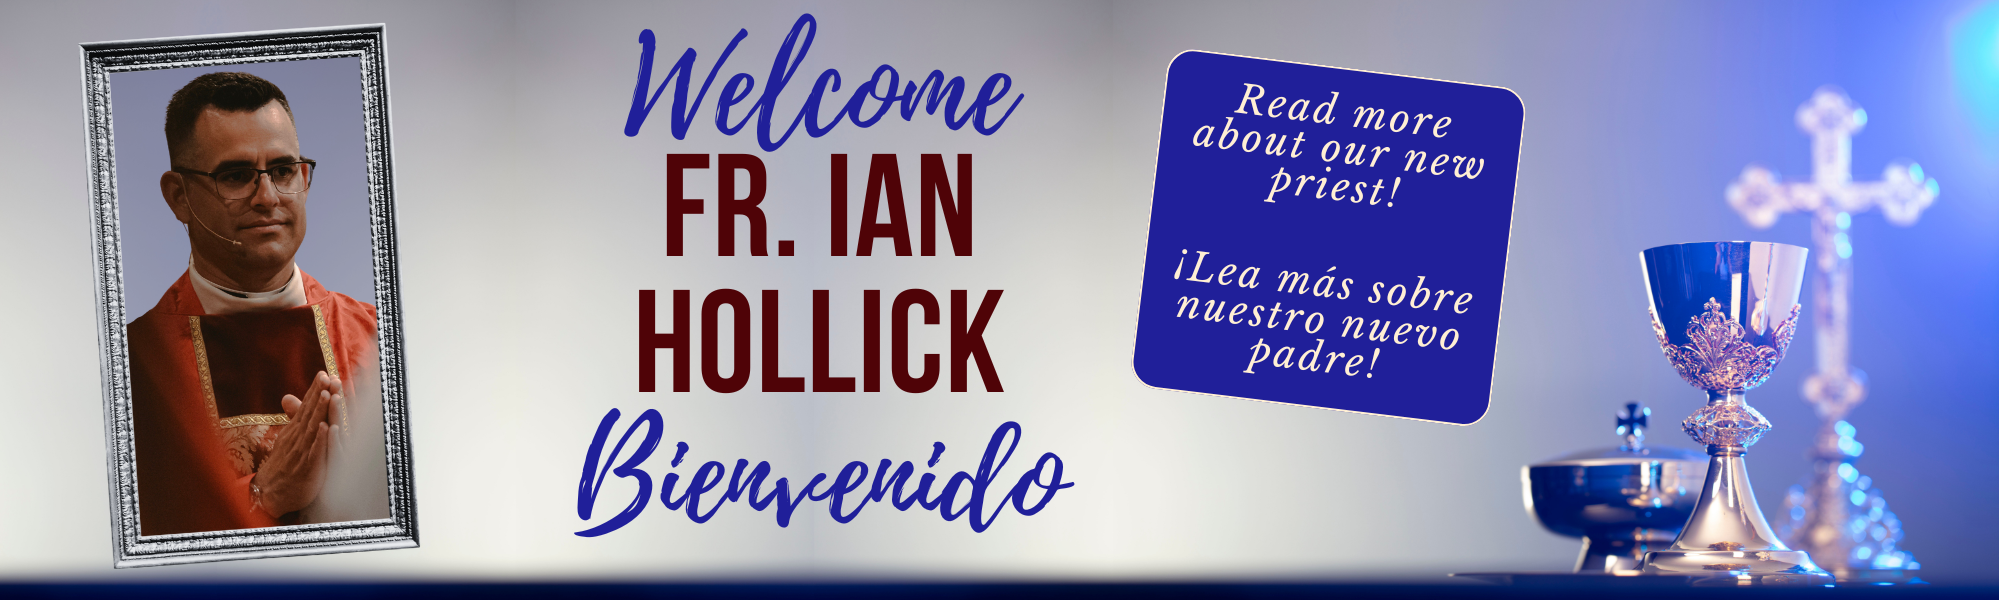 Welcome Fr Ian Hollick